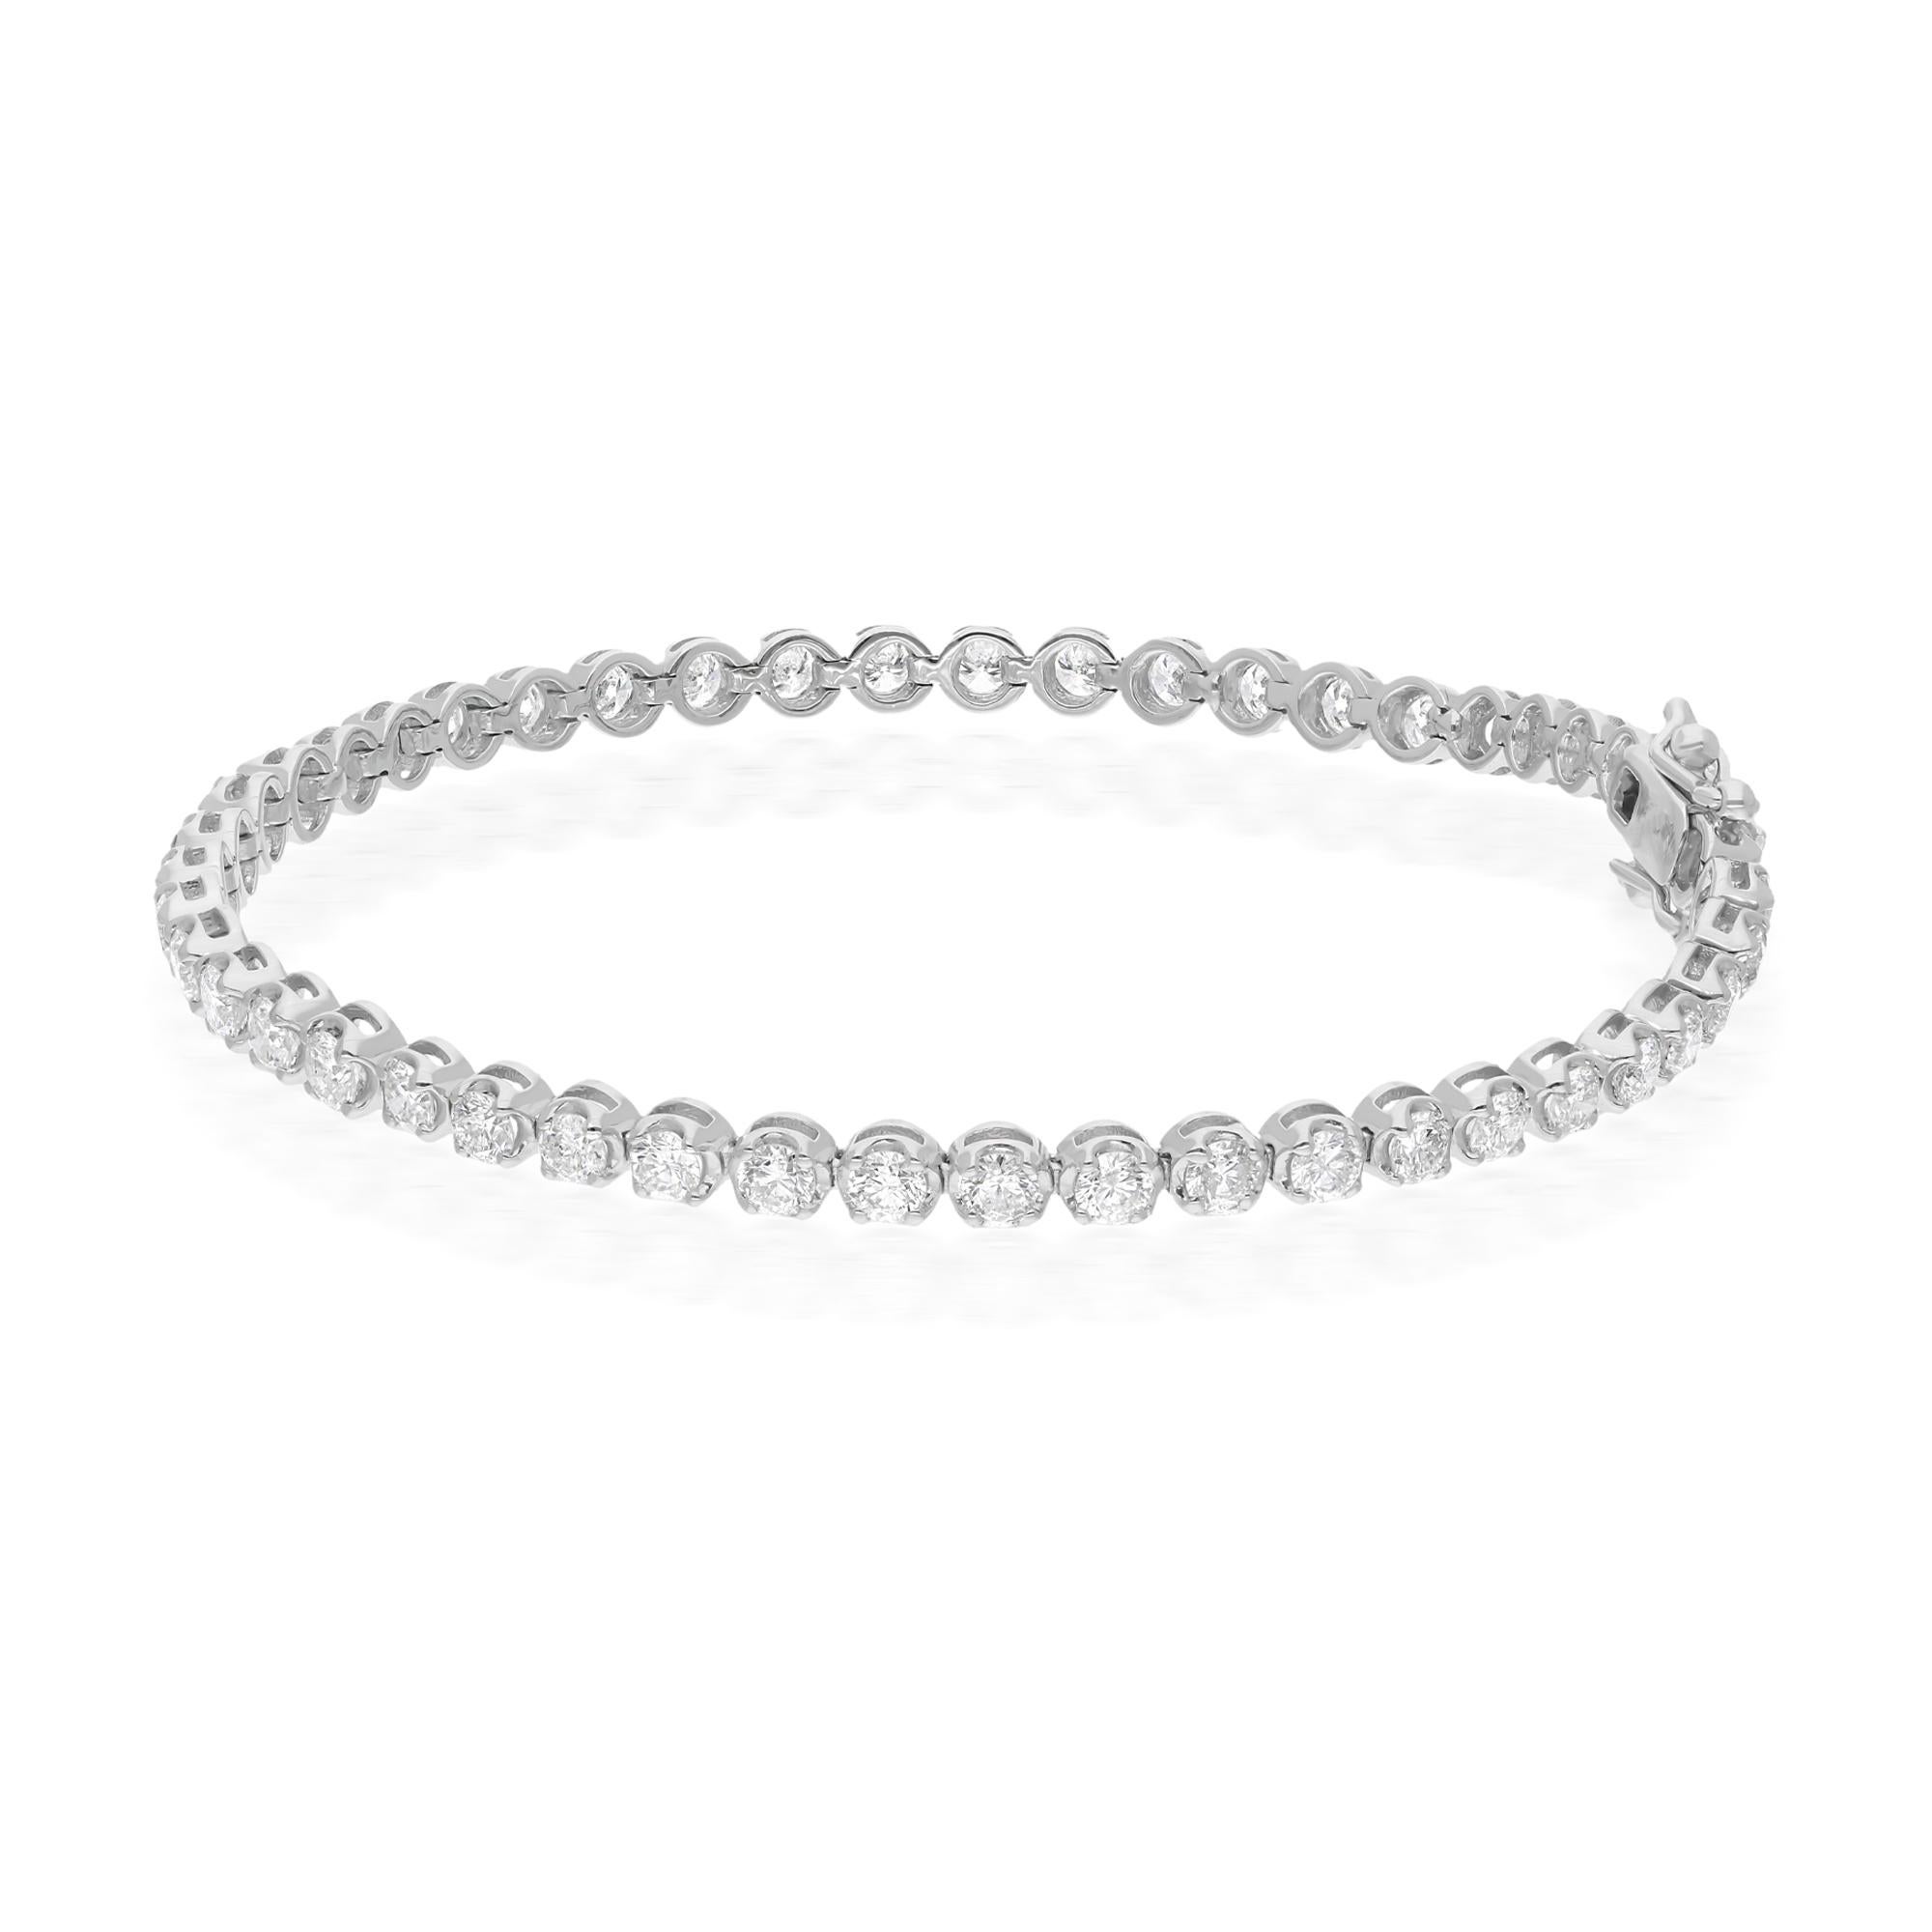 SI Clarity HI Color Round Diamond Tennis Bracelet 14 Karat White Gold Jewelry For Sale 1